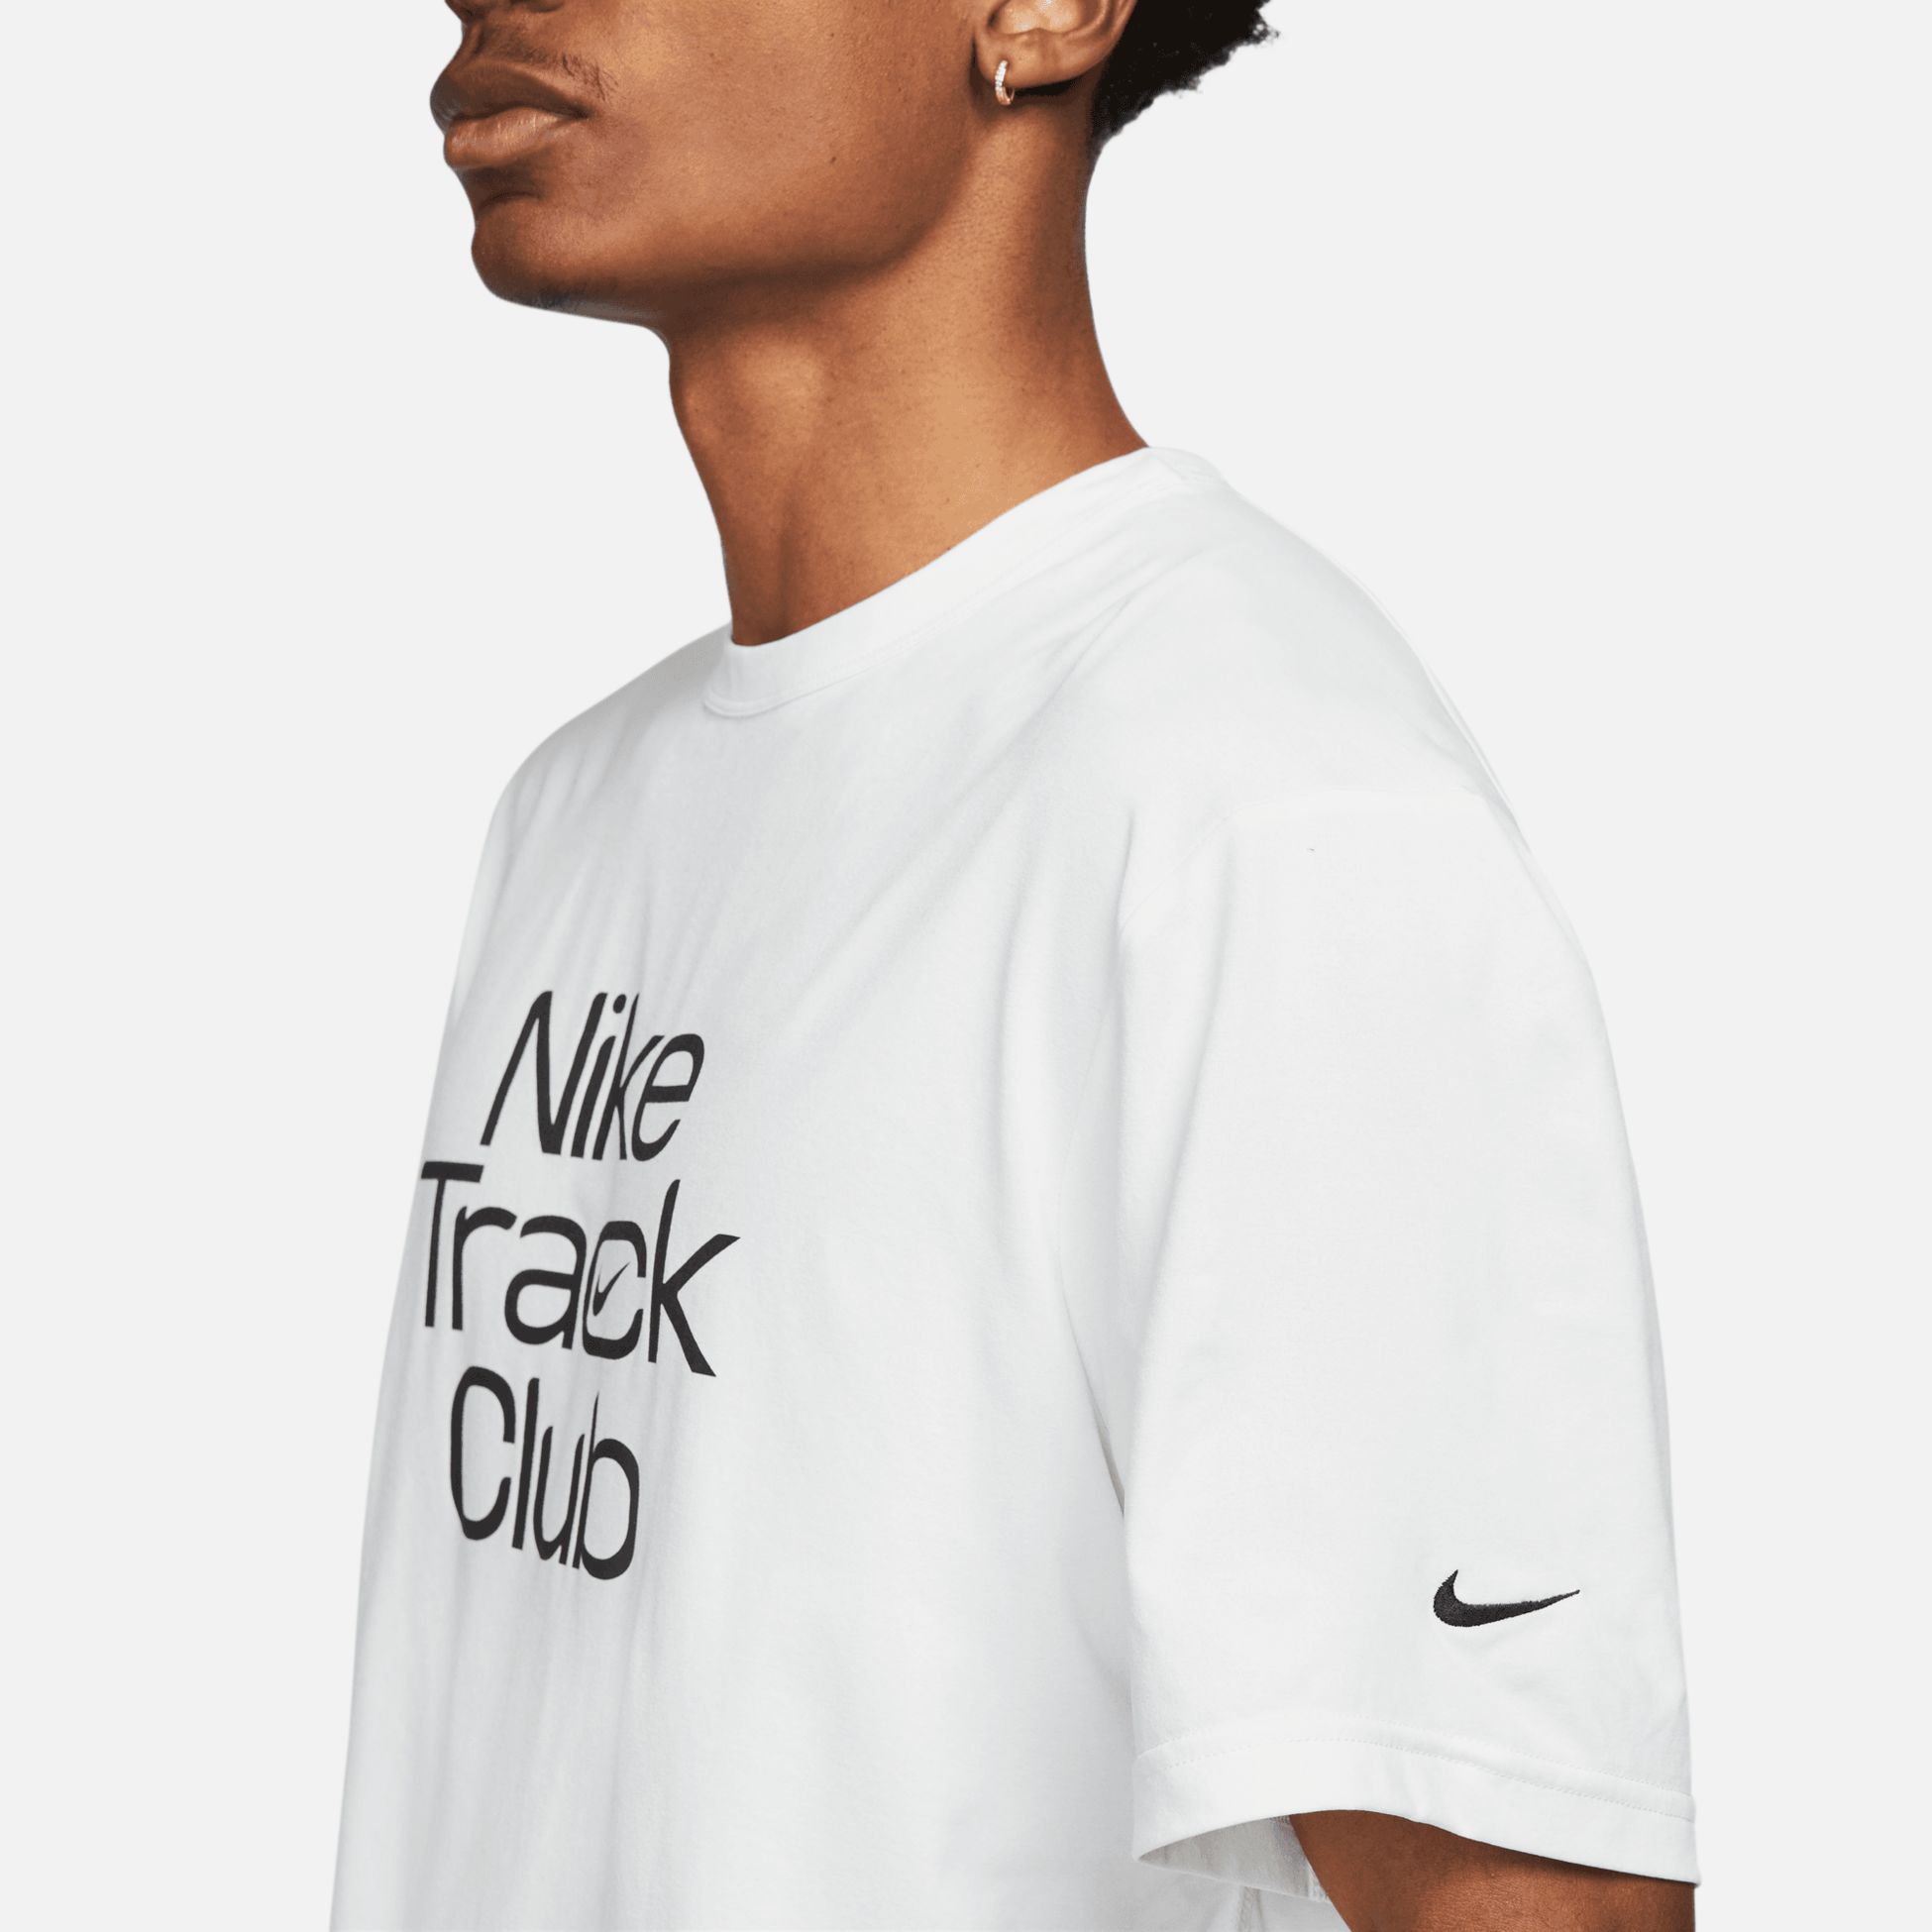 NIKE, Nike Dri-FIT Hyverse Track Club Men